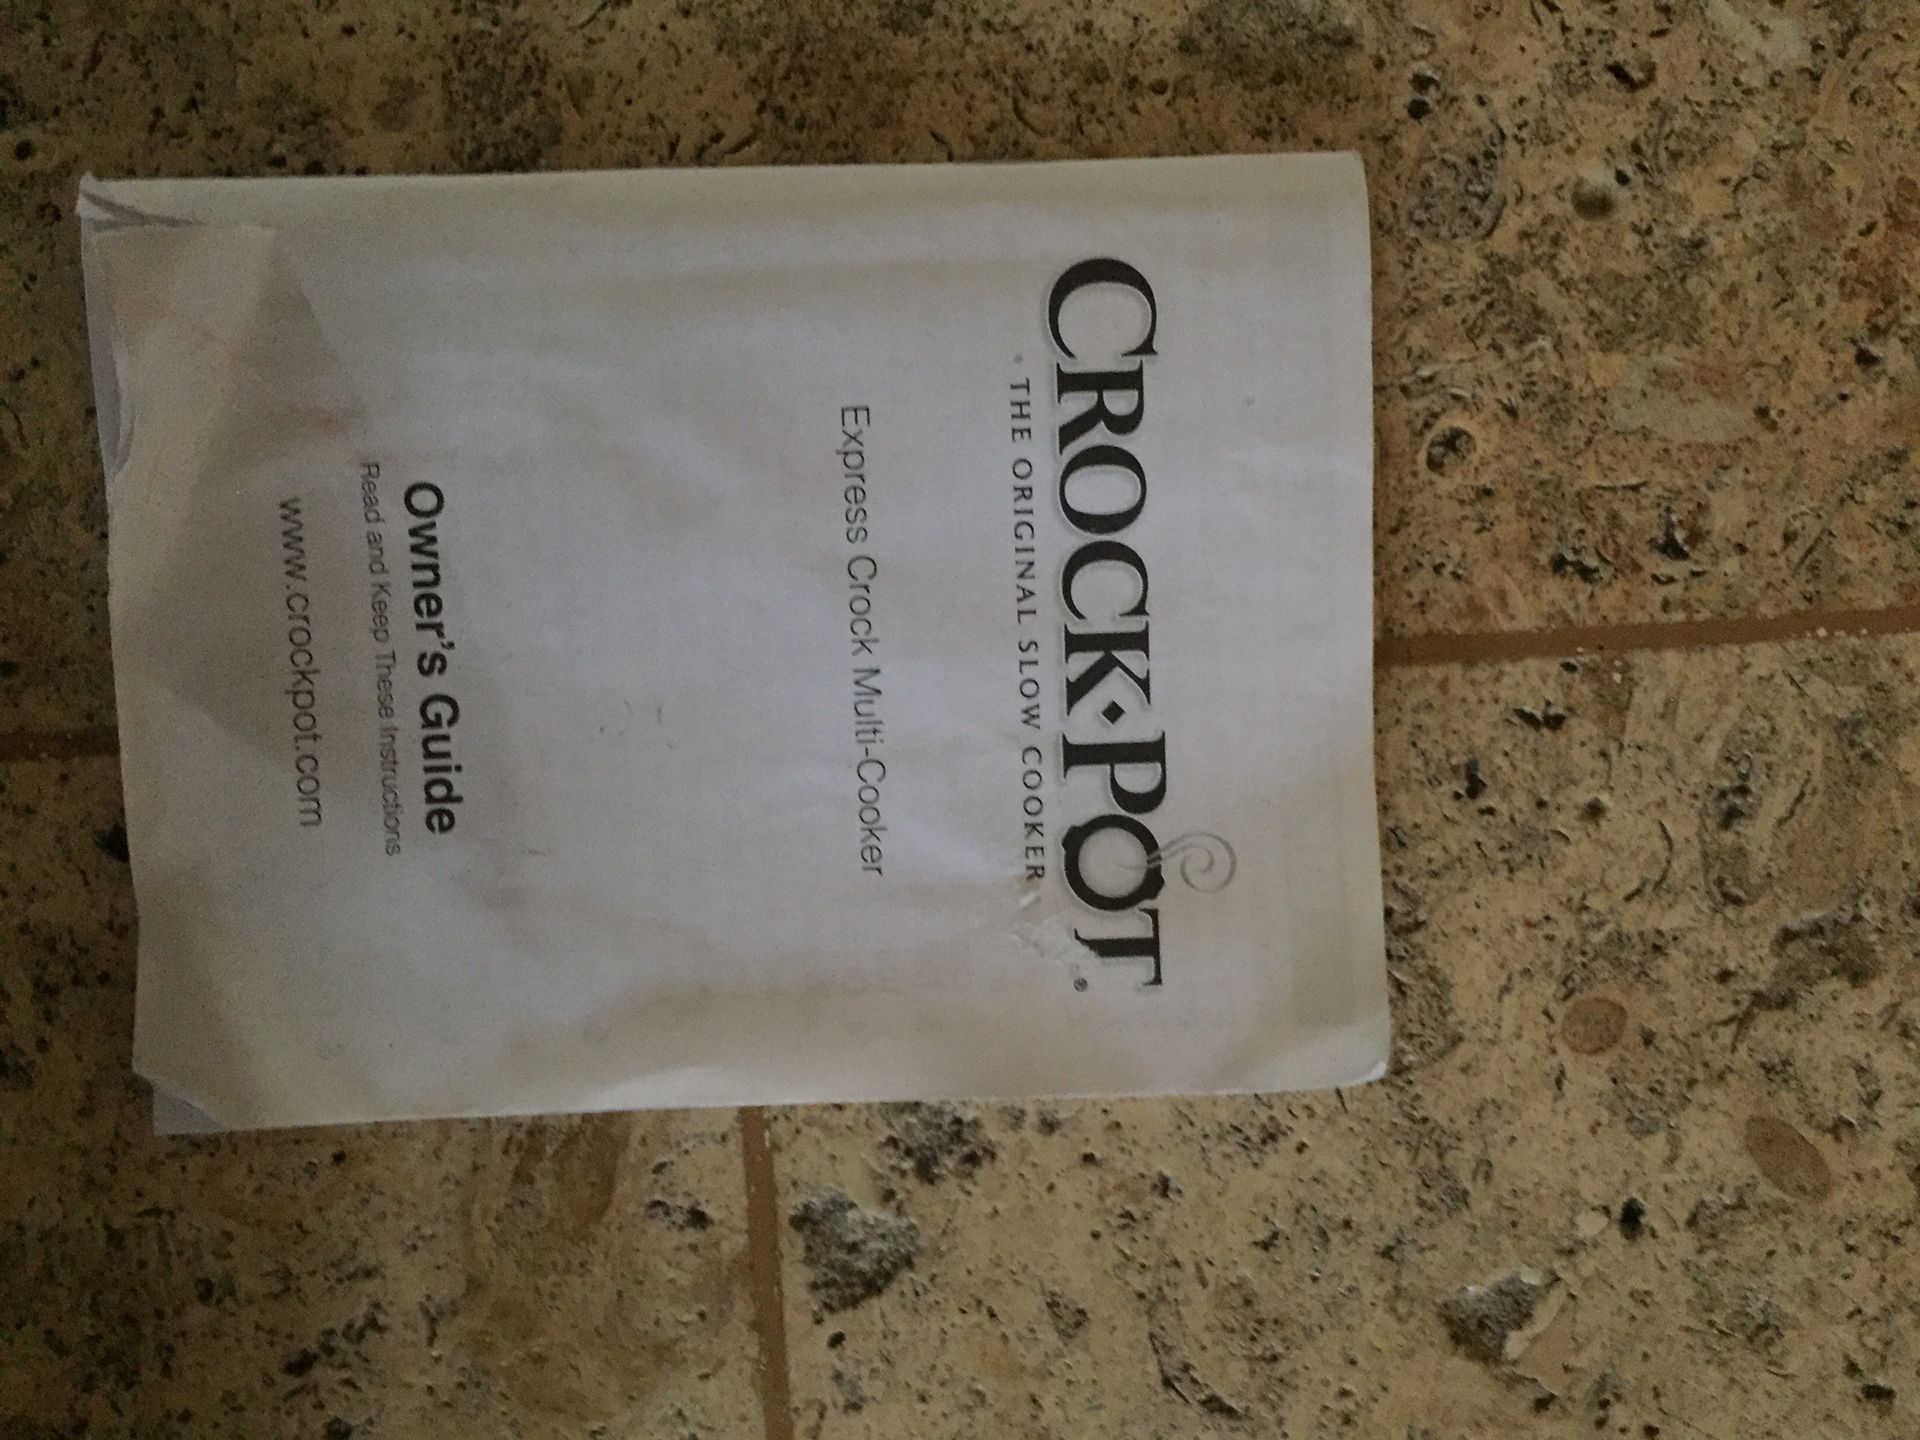 Open box Crock pot pressure cooker w manual